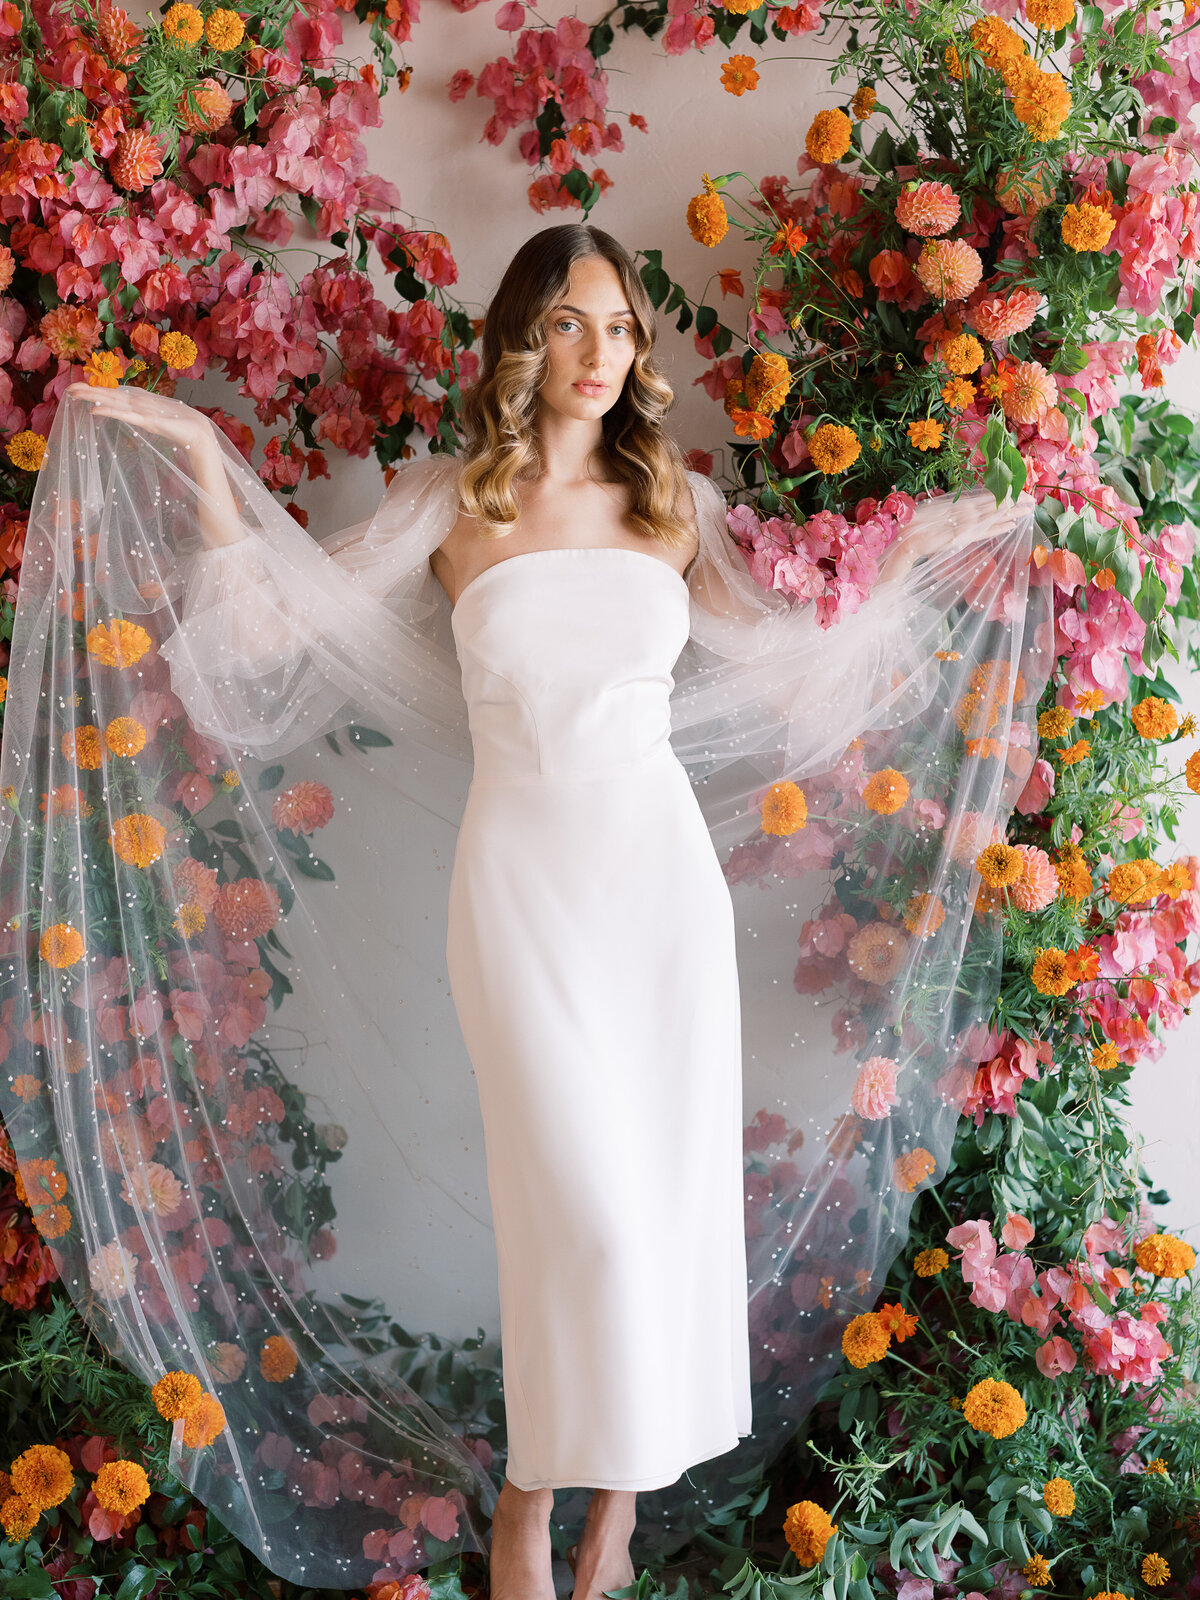 Sarah Rae Floral Designs Wedding Event Florist Flowers Kentucky Chic Whimsical Romantic Weddings23